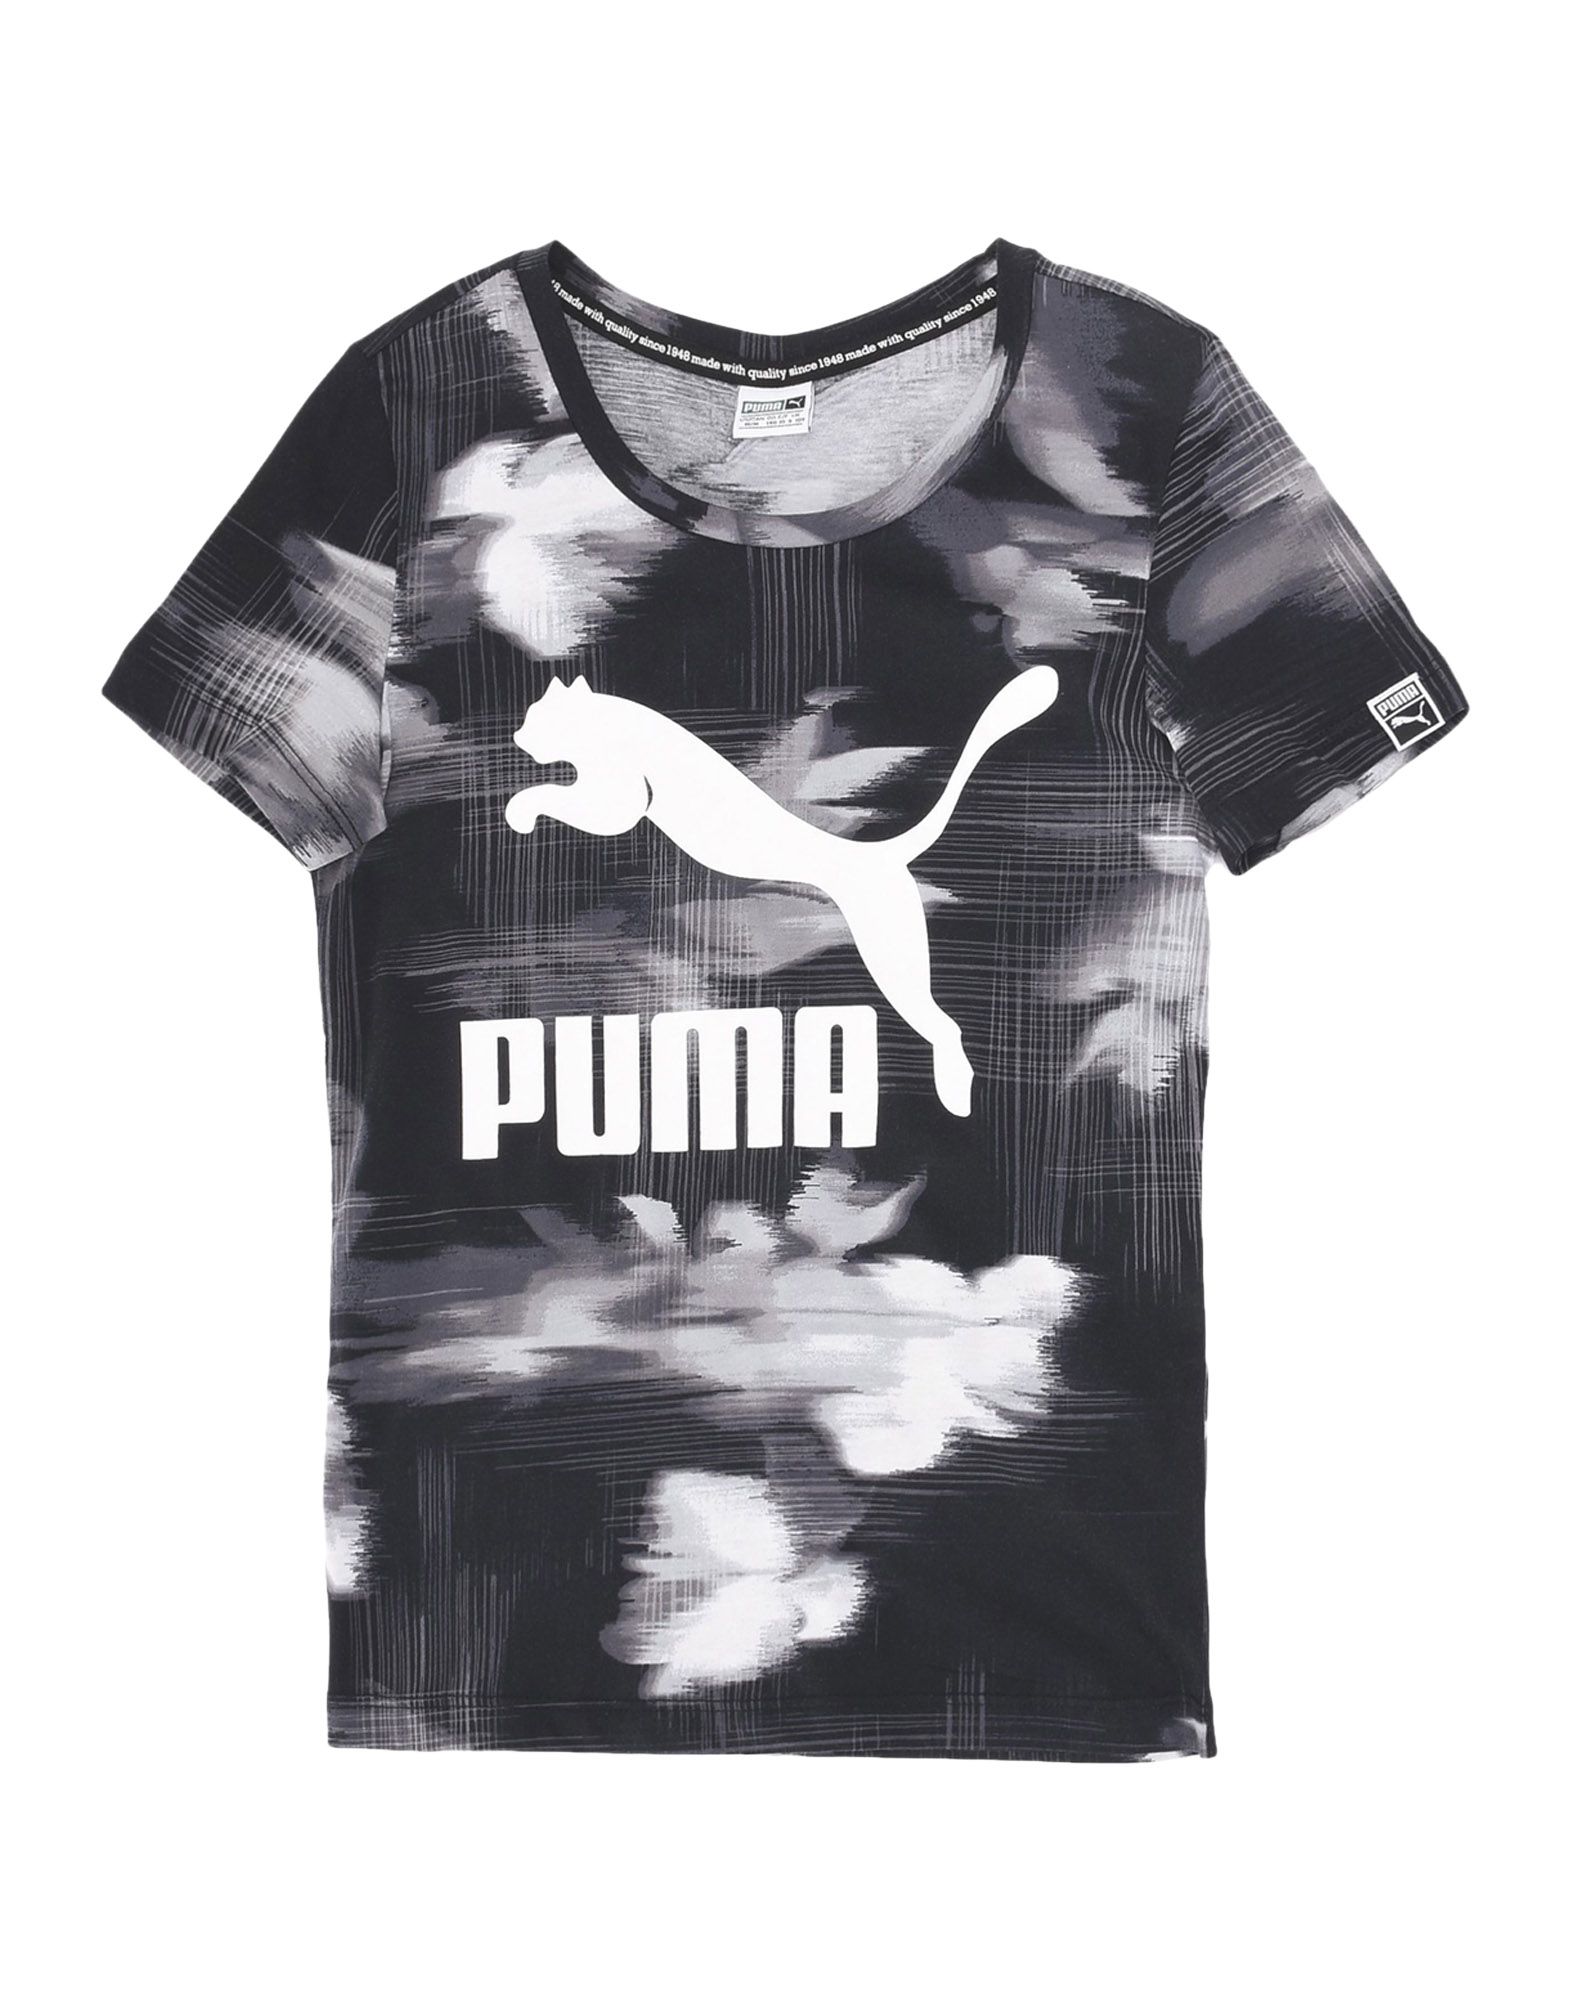 Puma Puma T Shirts From Yoox Com Shefinds